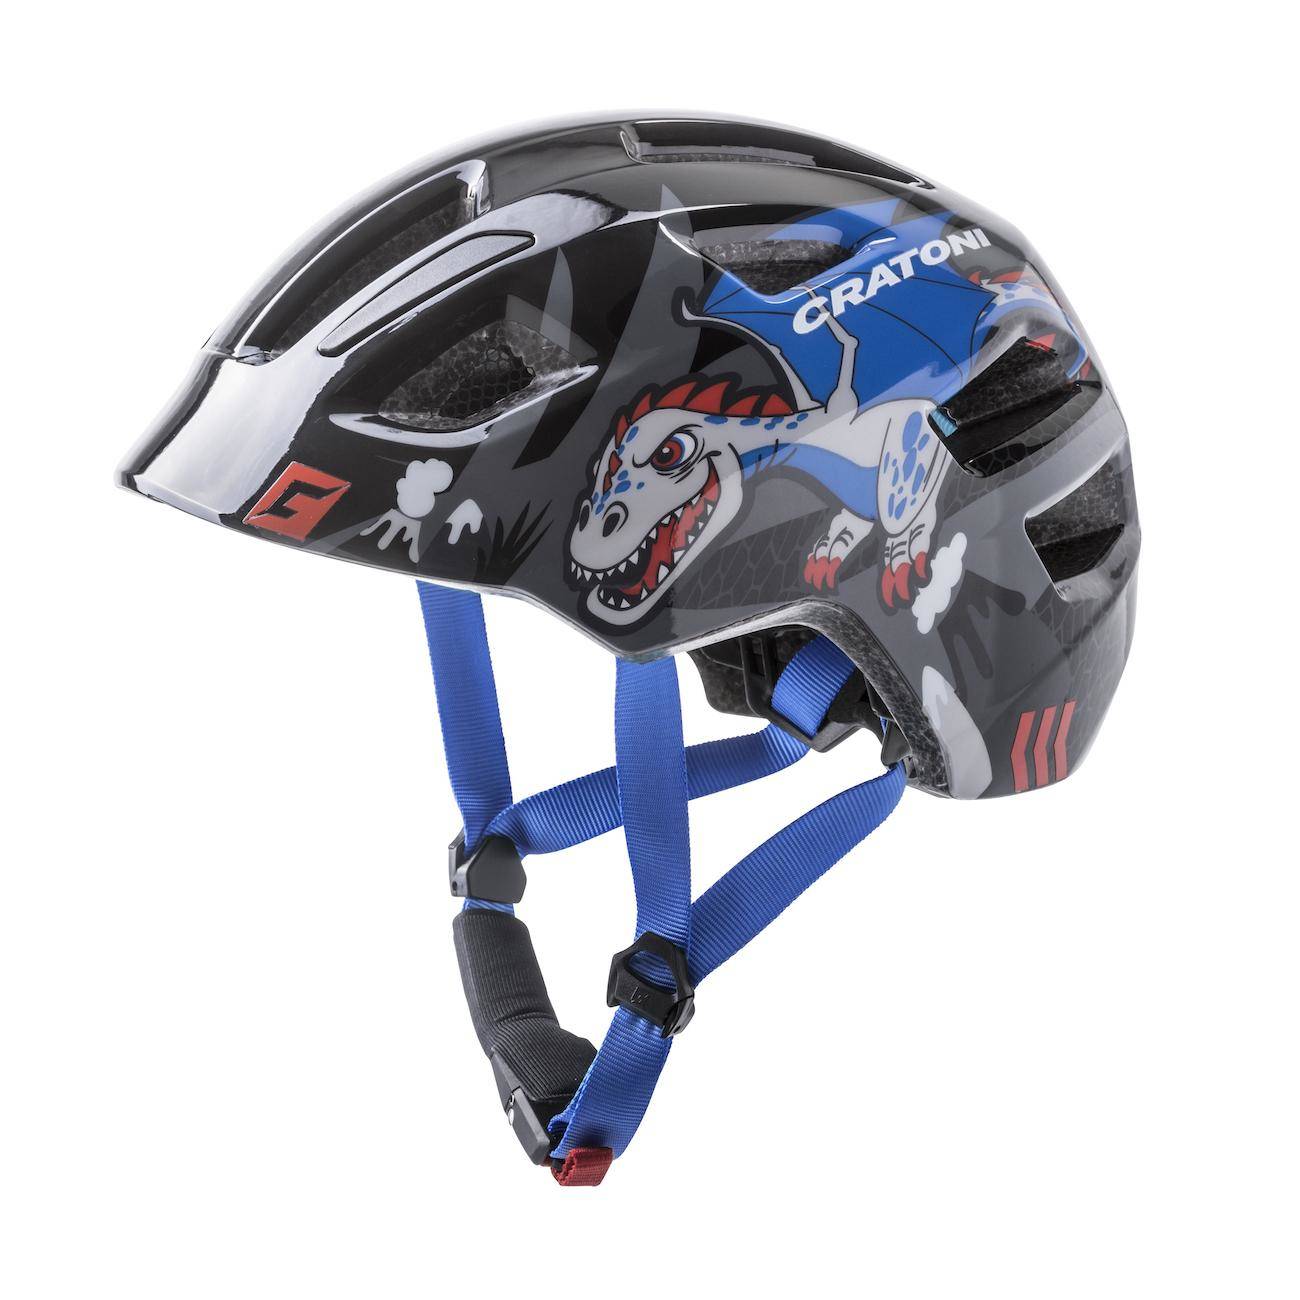 Велосипедный шлем Cratoni Maxster, black dragon glossy, S/M